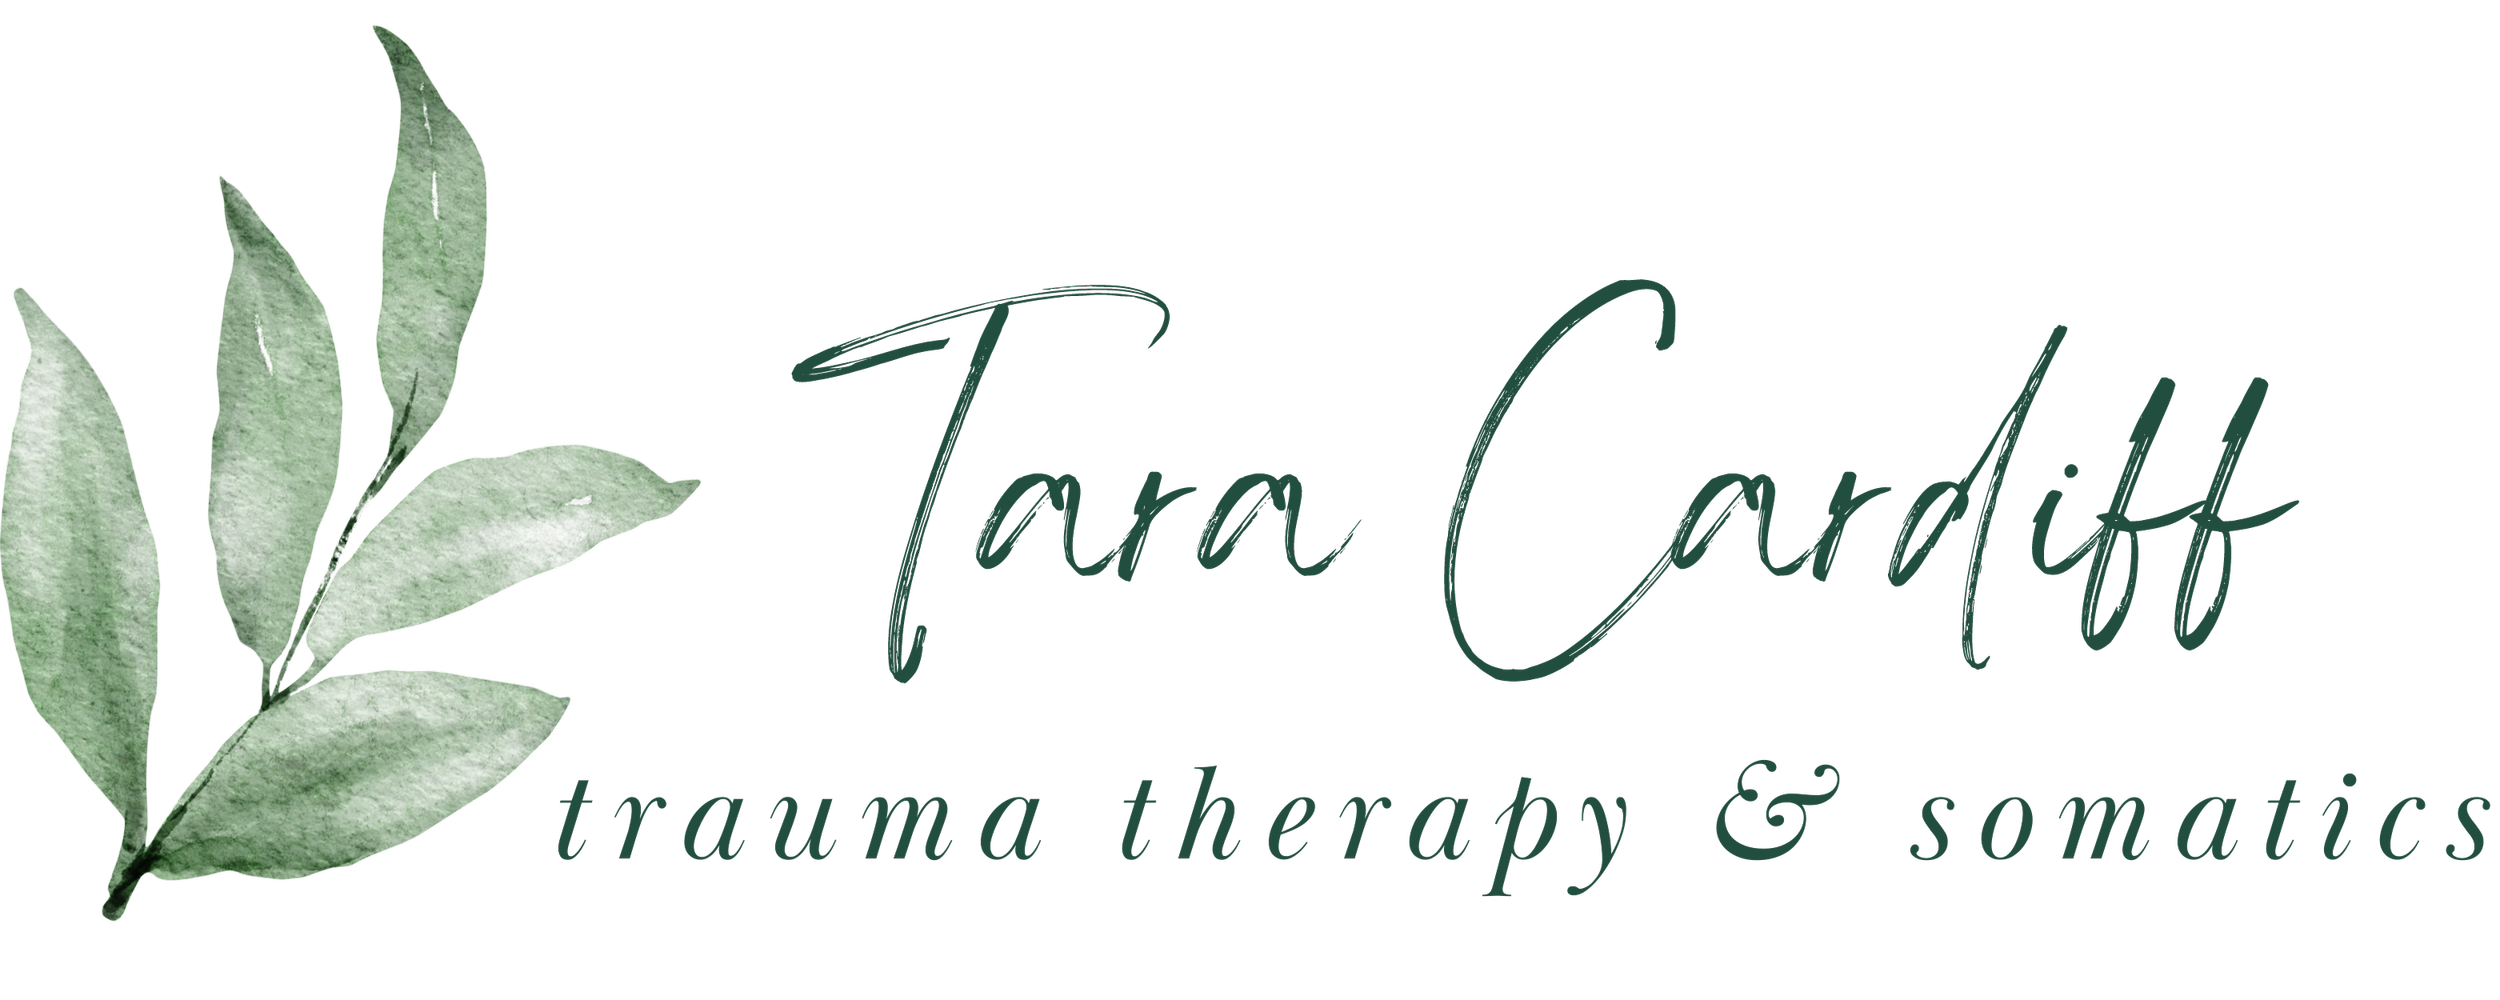 Tara Cardiff - Trauma Therapy &amp; Somatics in Guelph